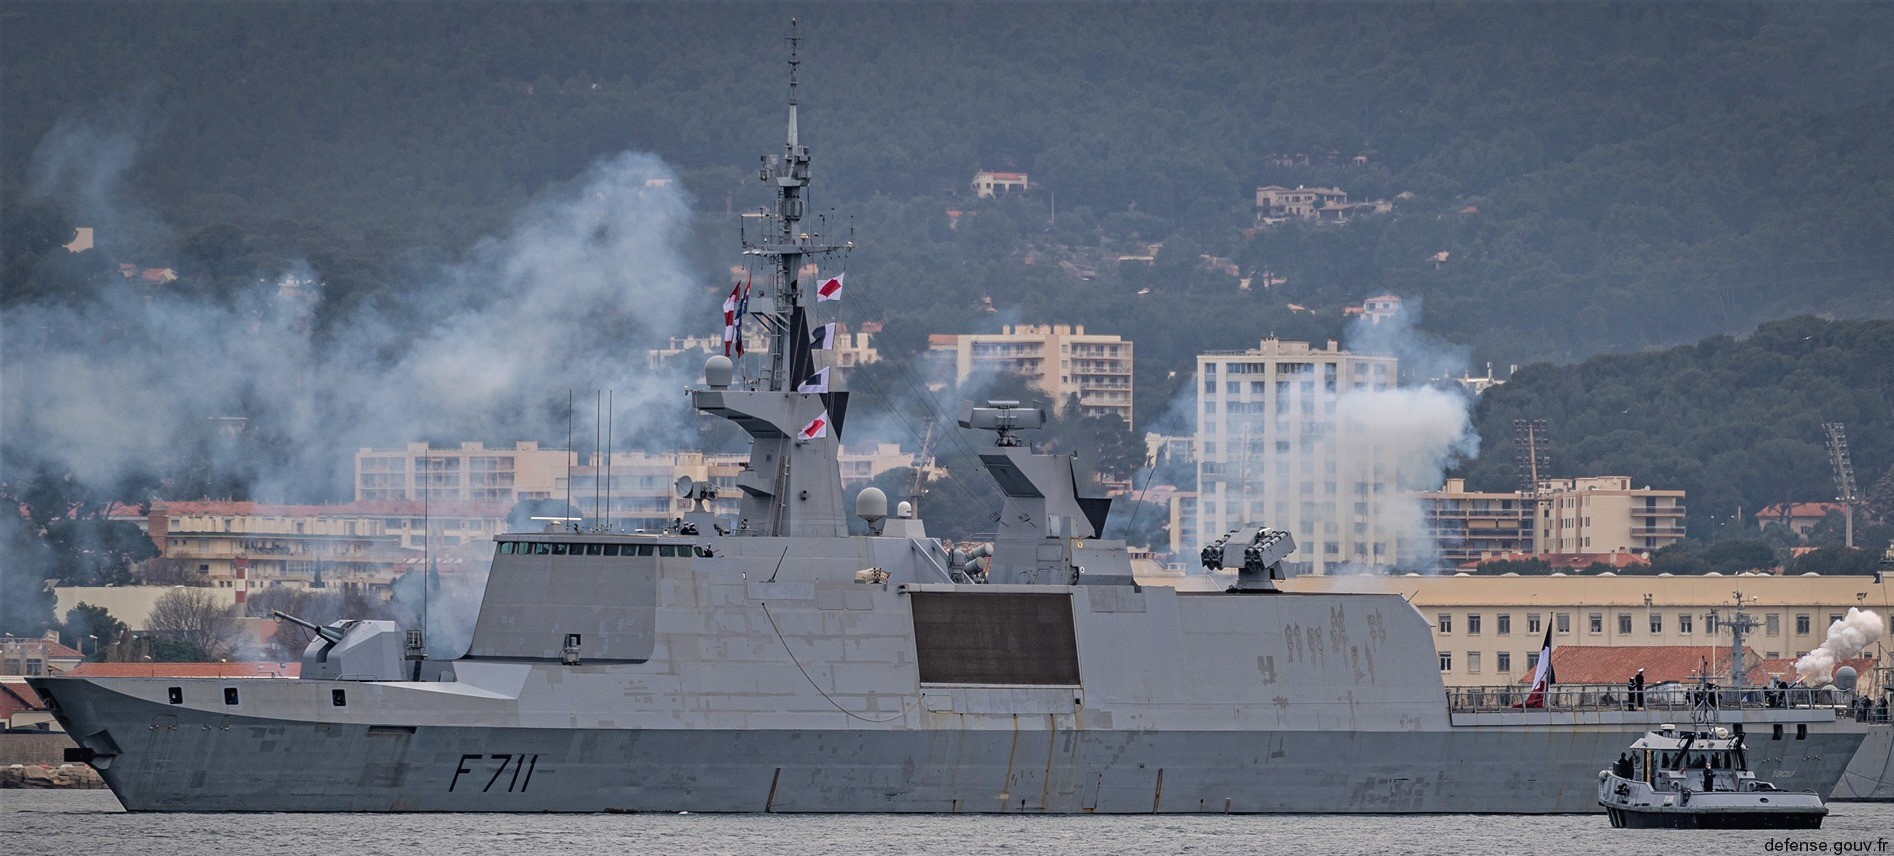 f-711 fs surcouf la fayette class frigate french navy marine nationale 36